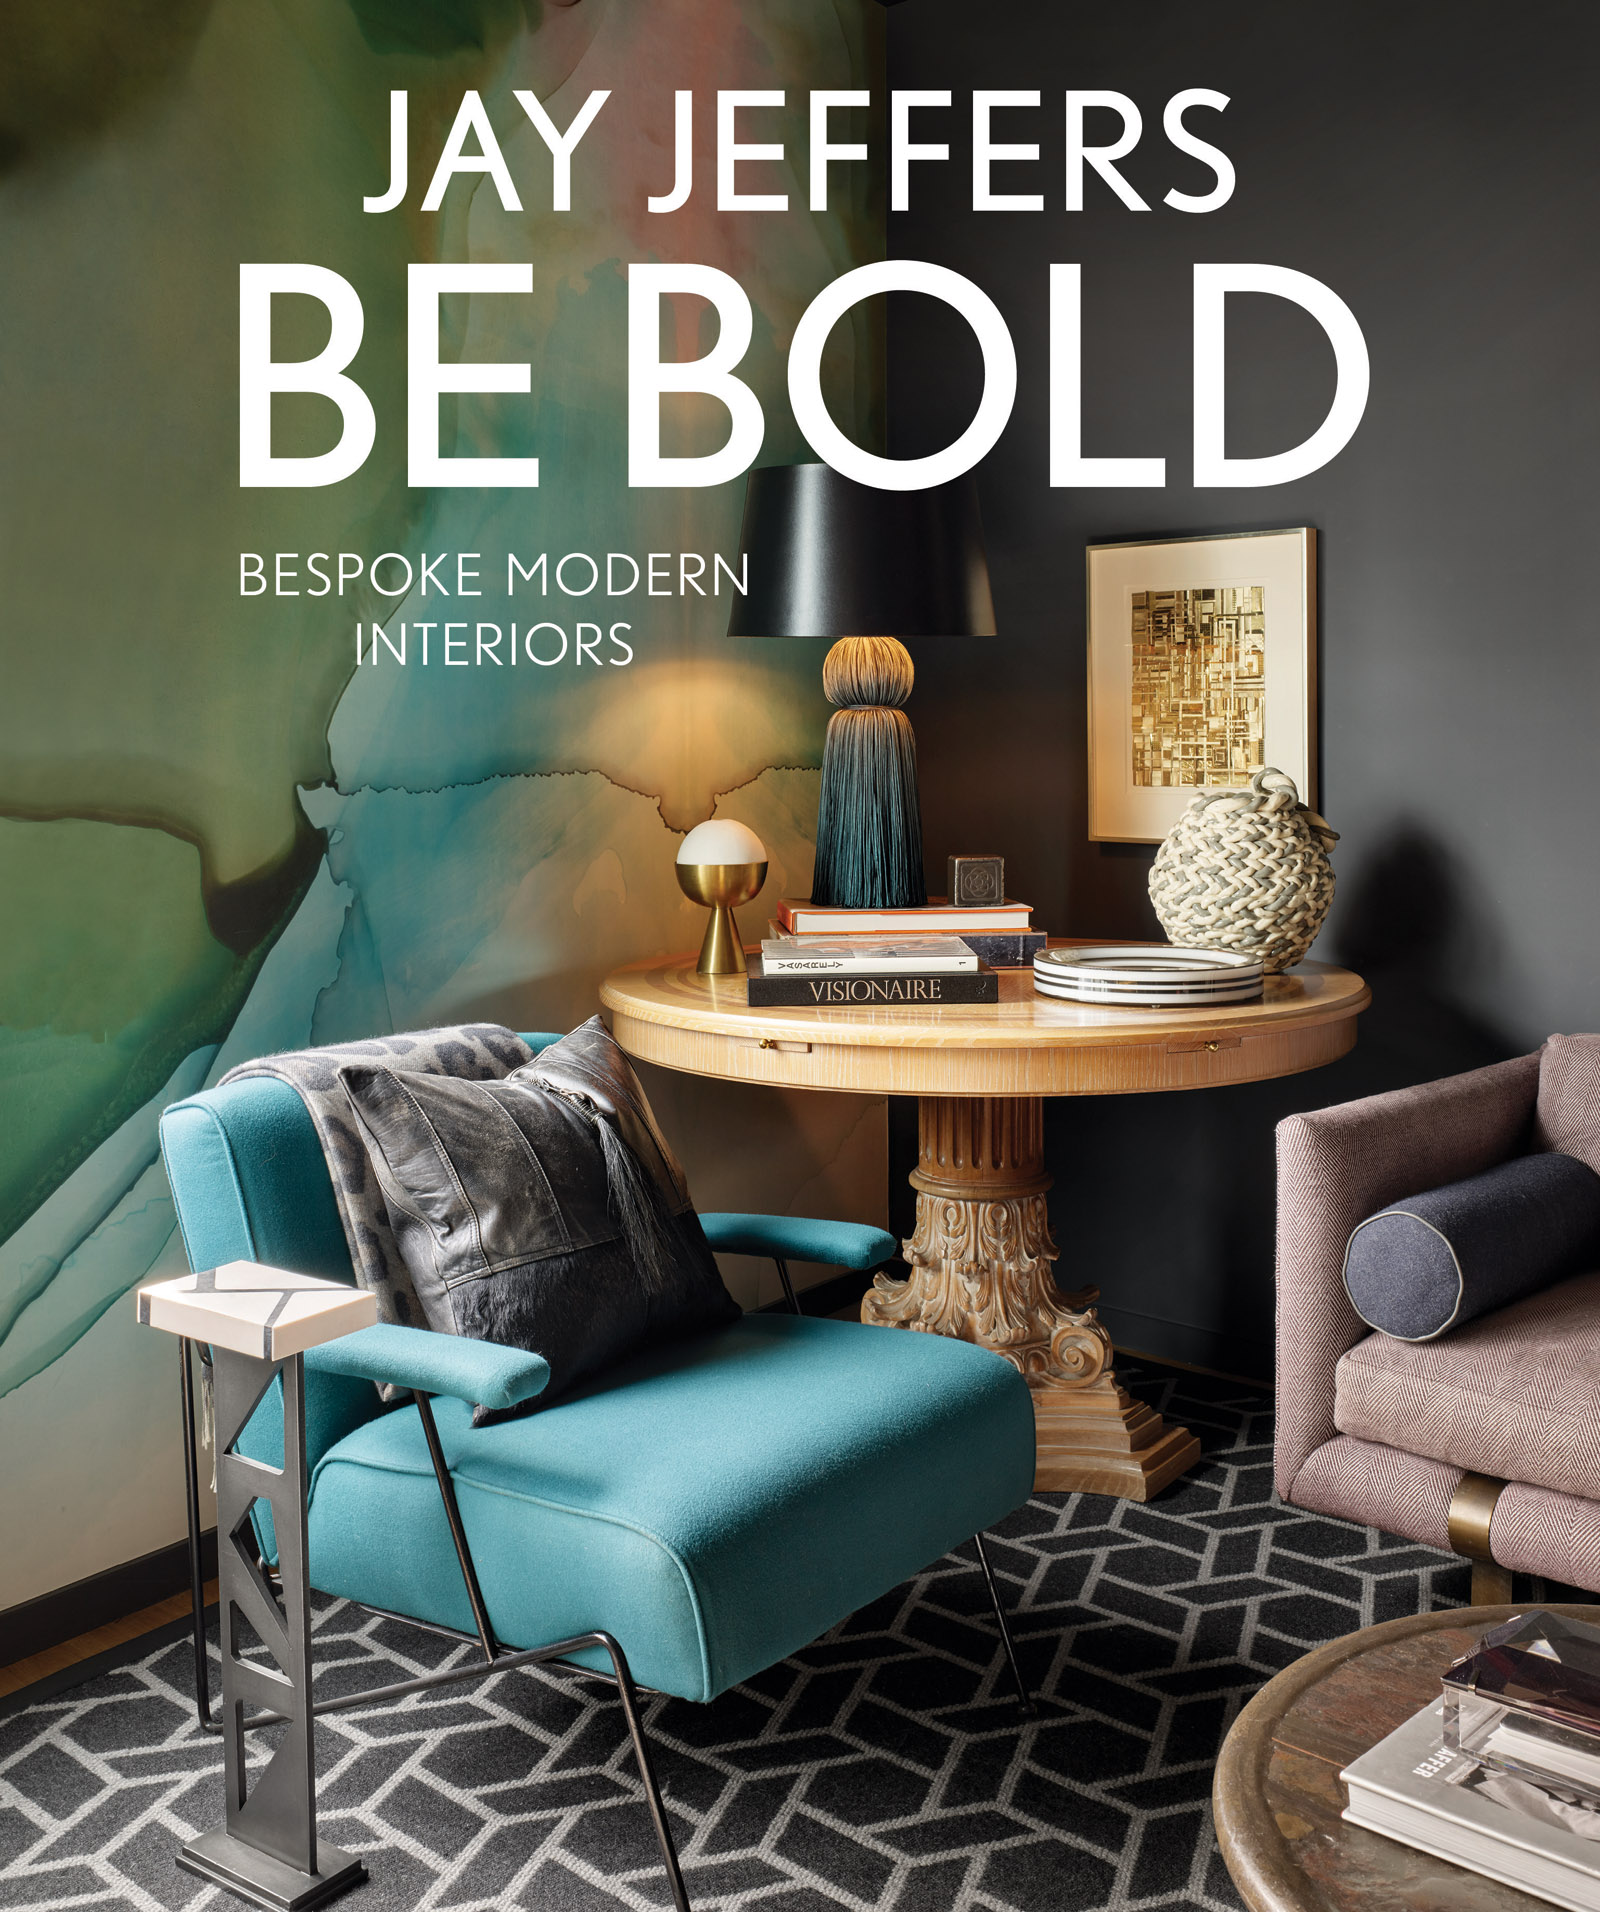 Jay Jeffers Be Bold: Bespoke Modern Interiors